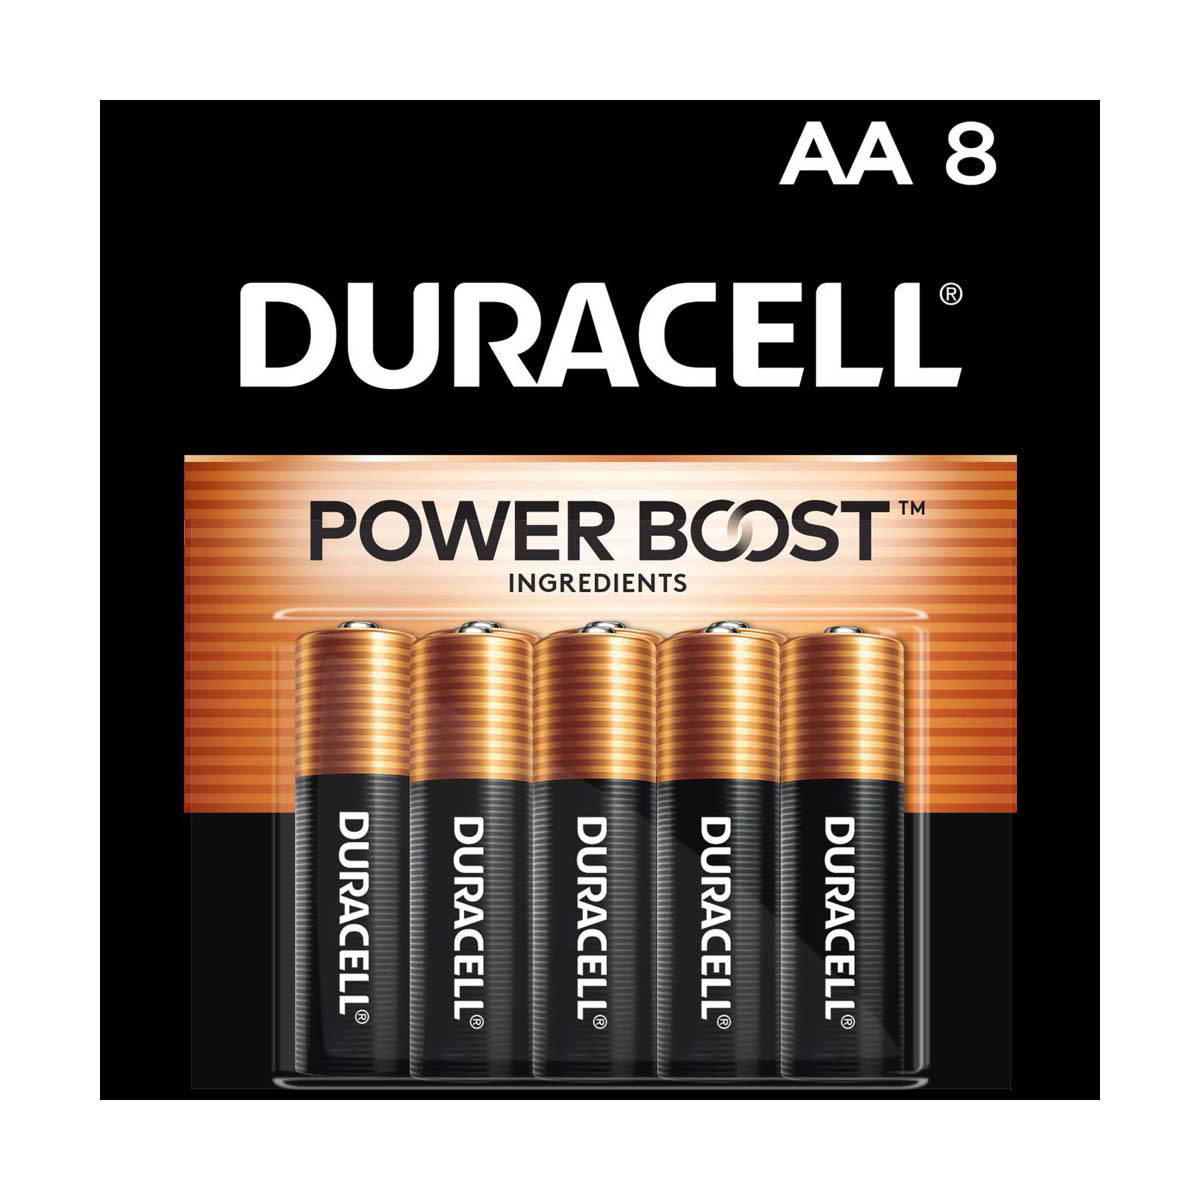 Energizer A23 23A 12V L1028F Alkaline battery pour Other formats